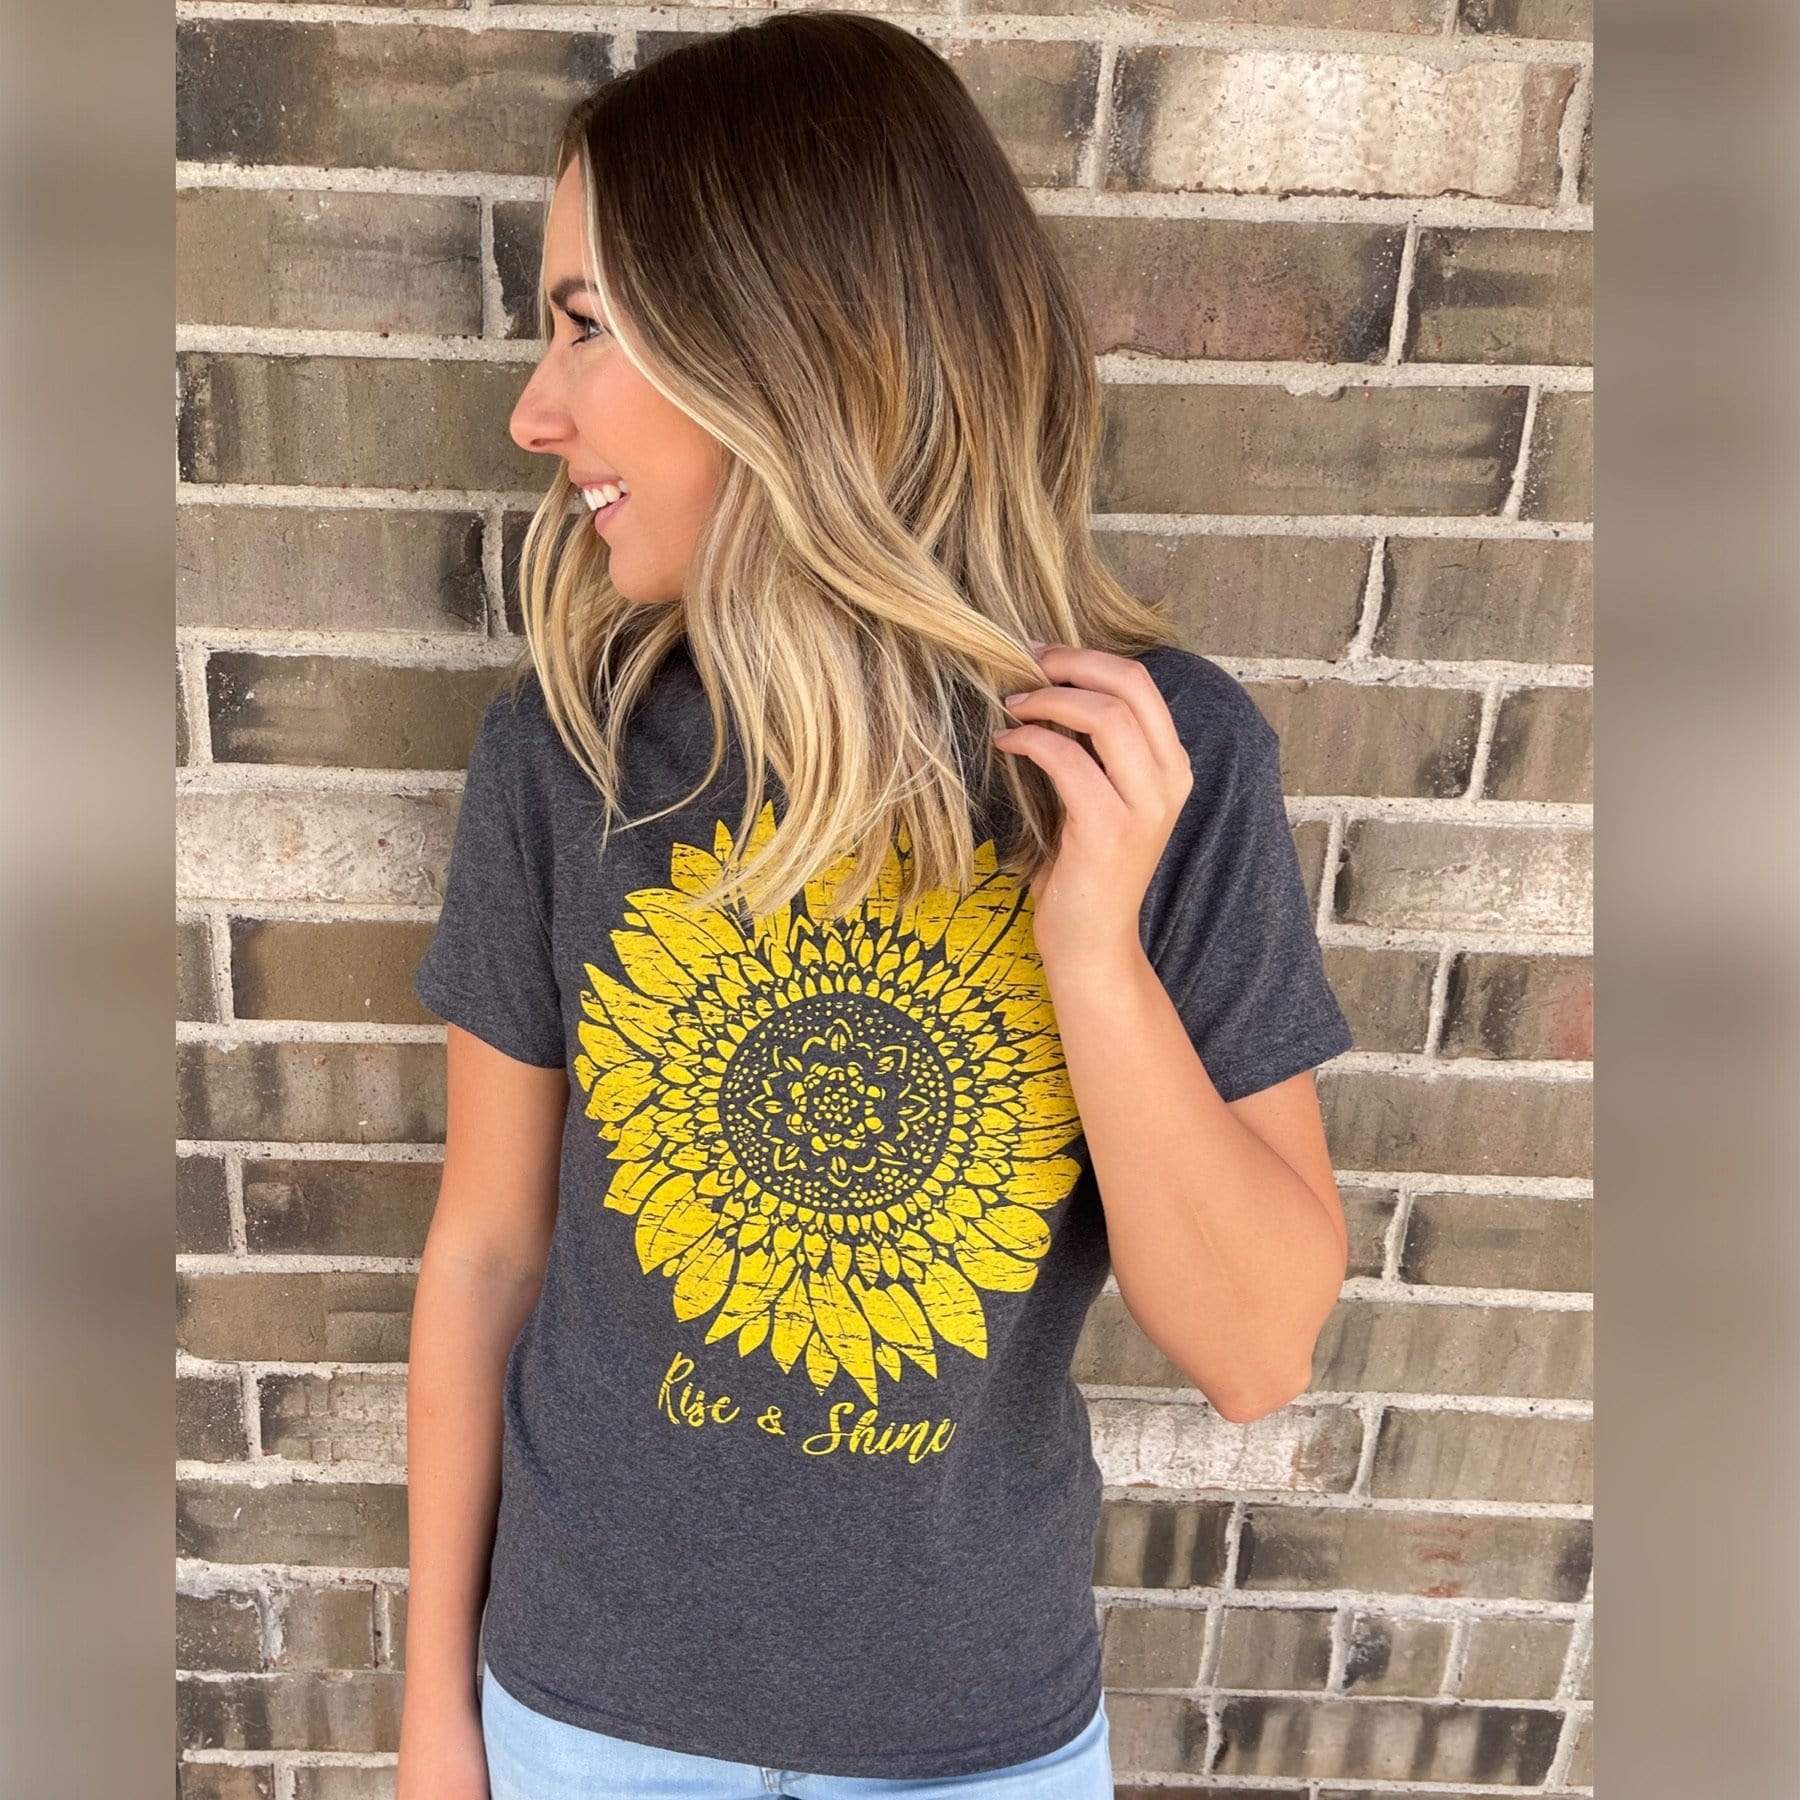 tvilling Ristede Raffinere Women's Rise & Shine Sunflower T-Shirt - Envy Stylz Boutique